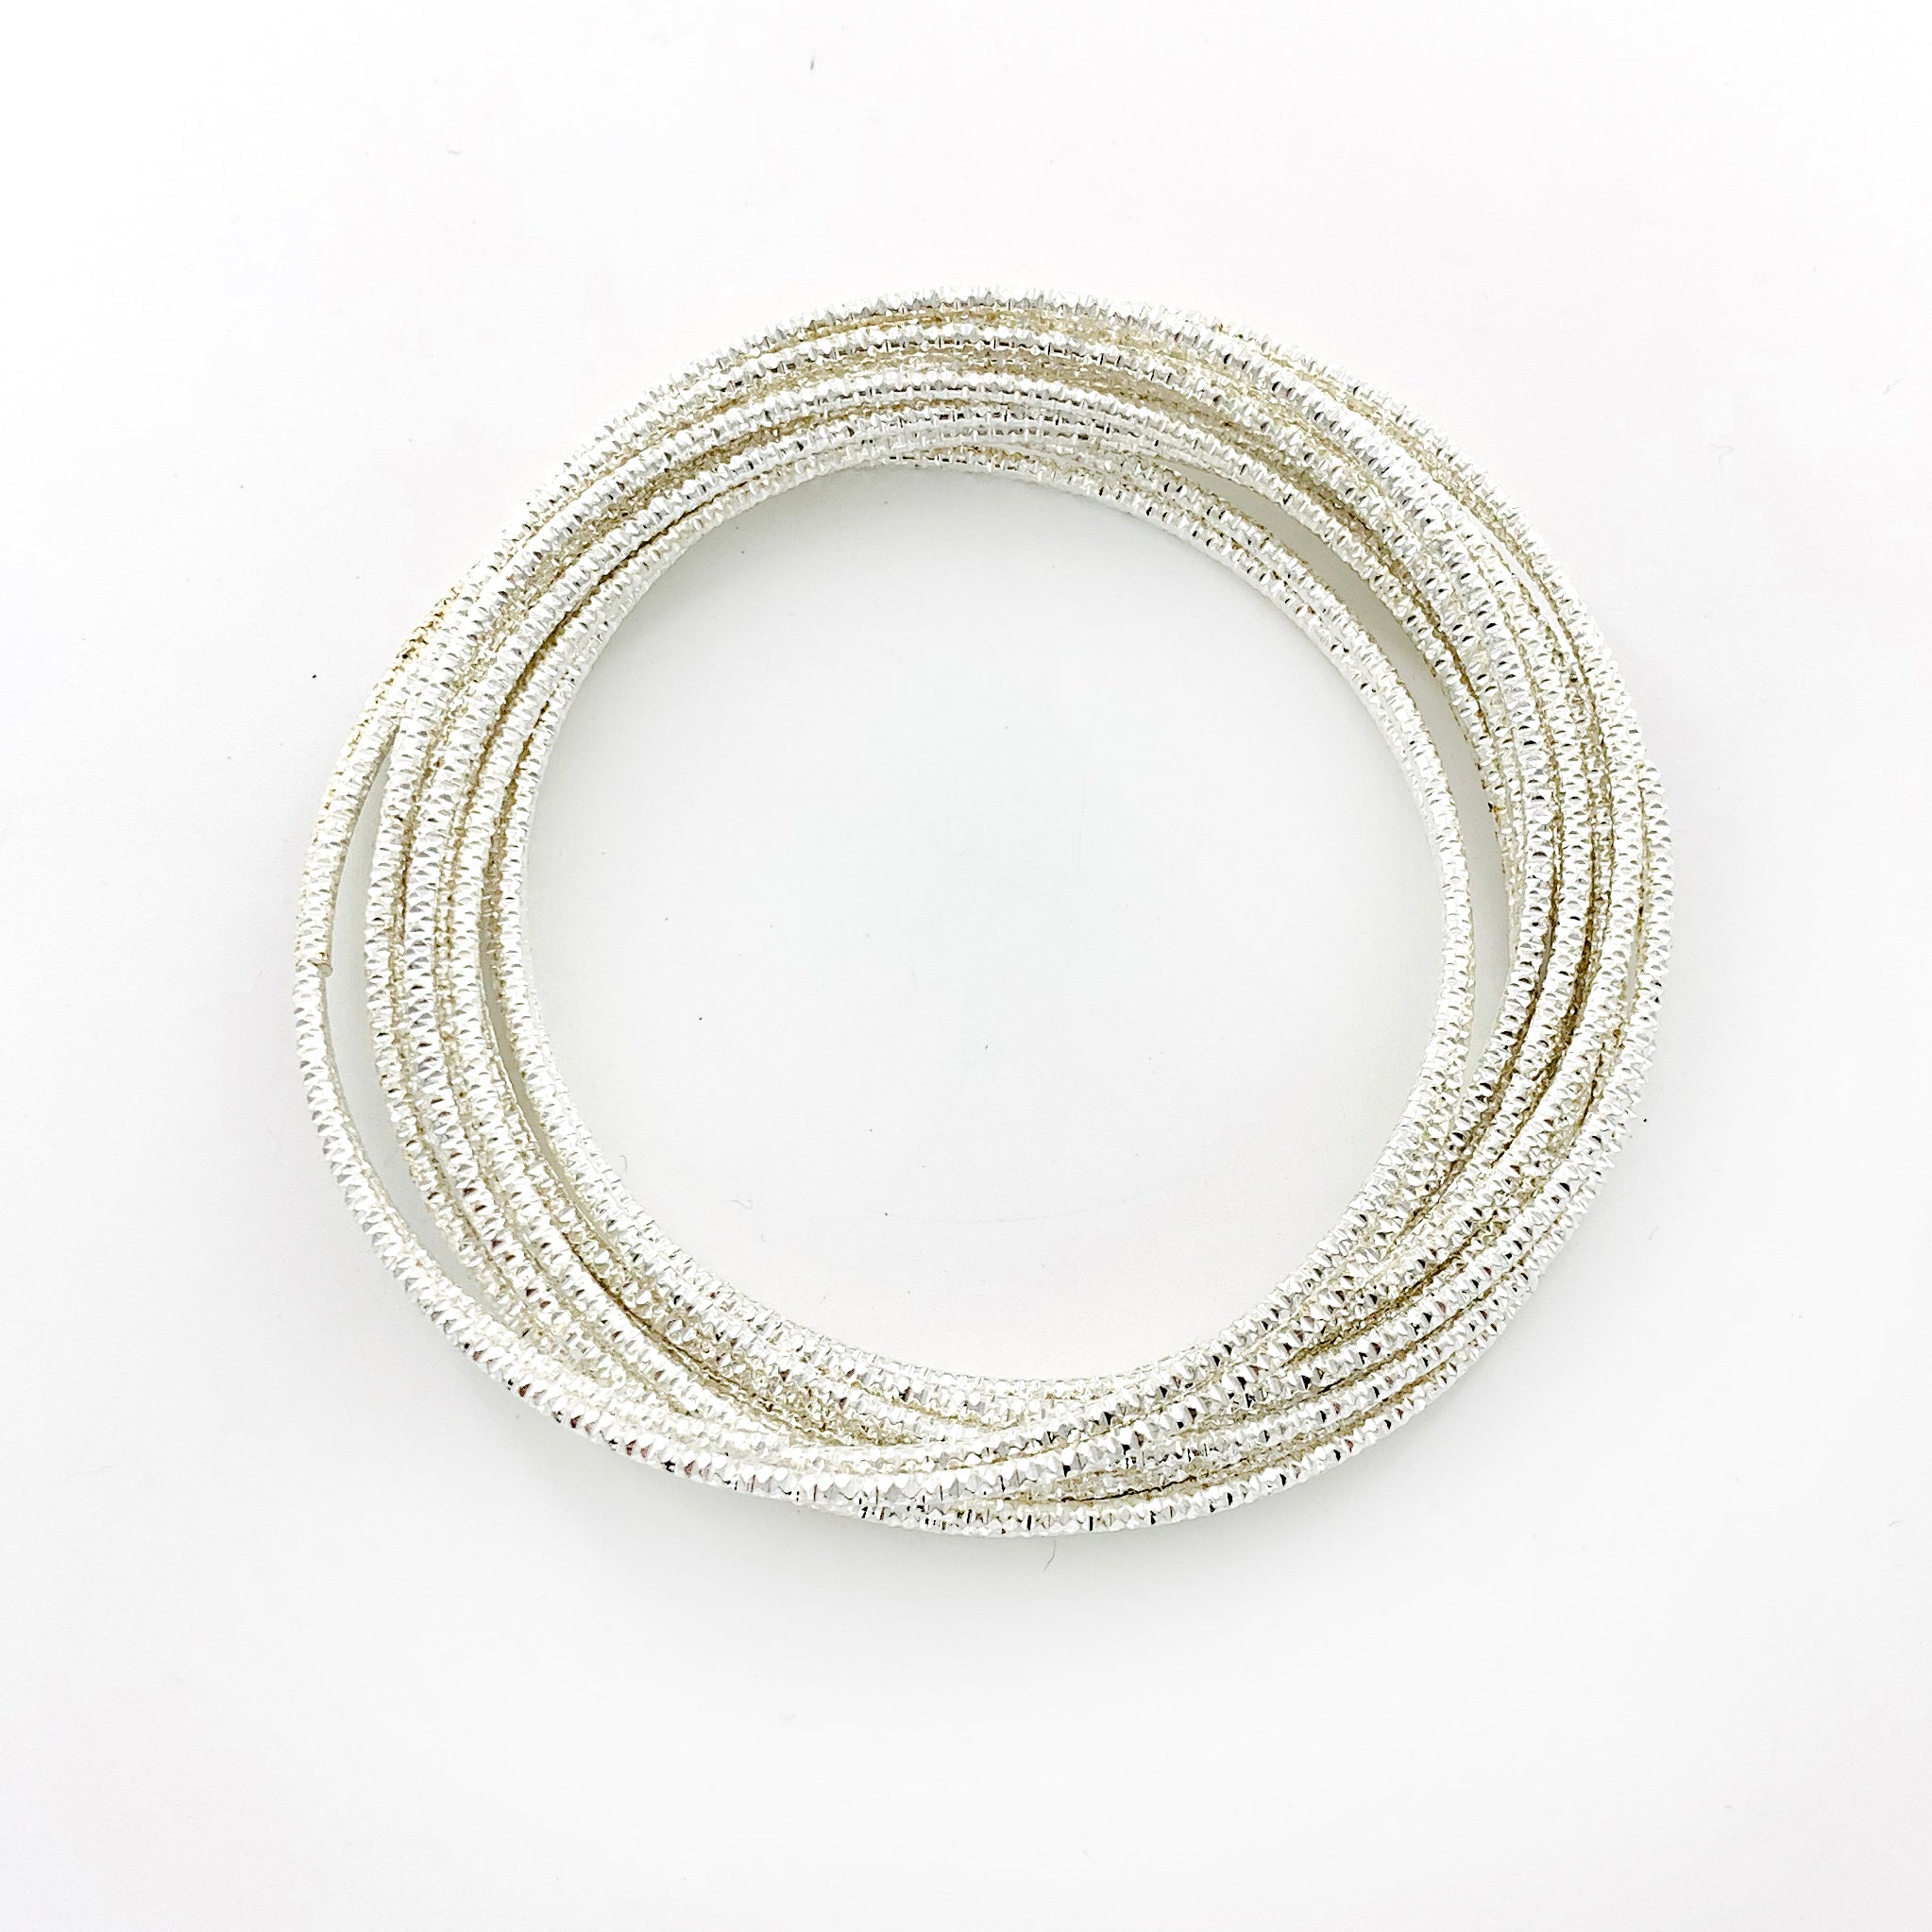 Textured white silver bangles